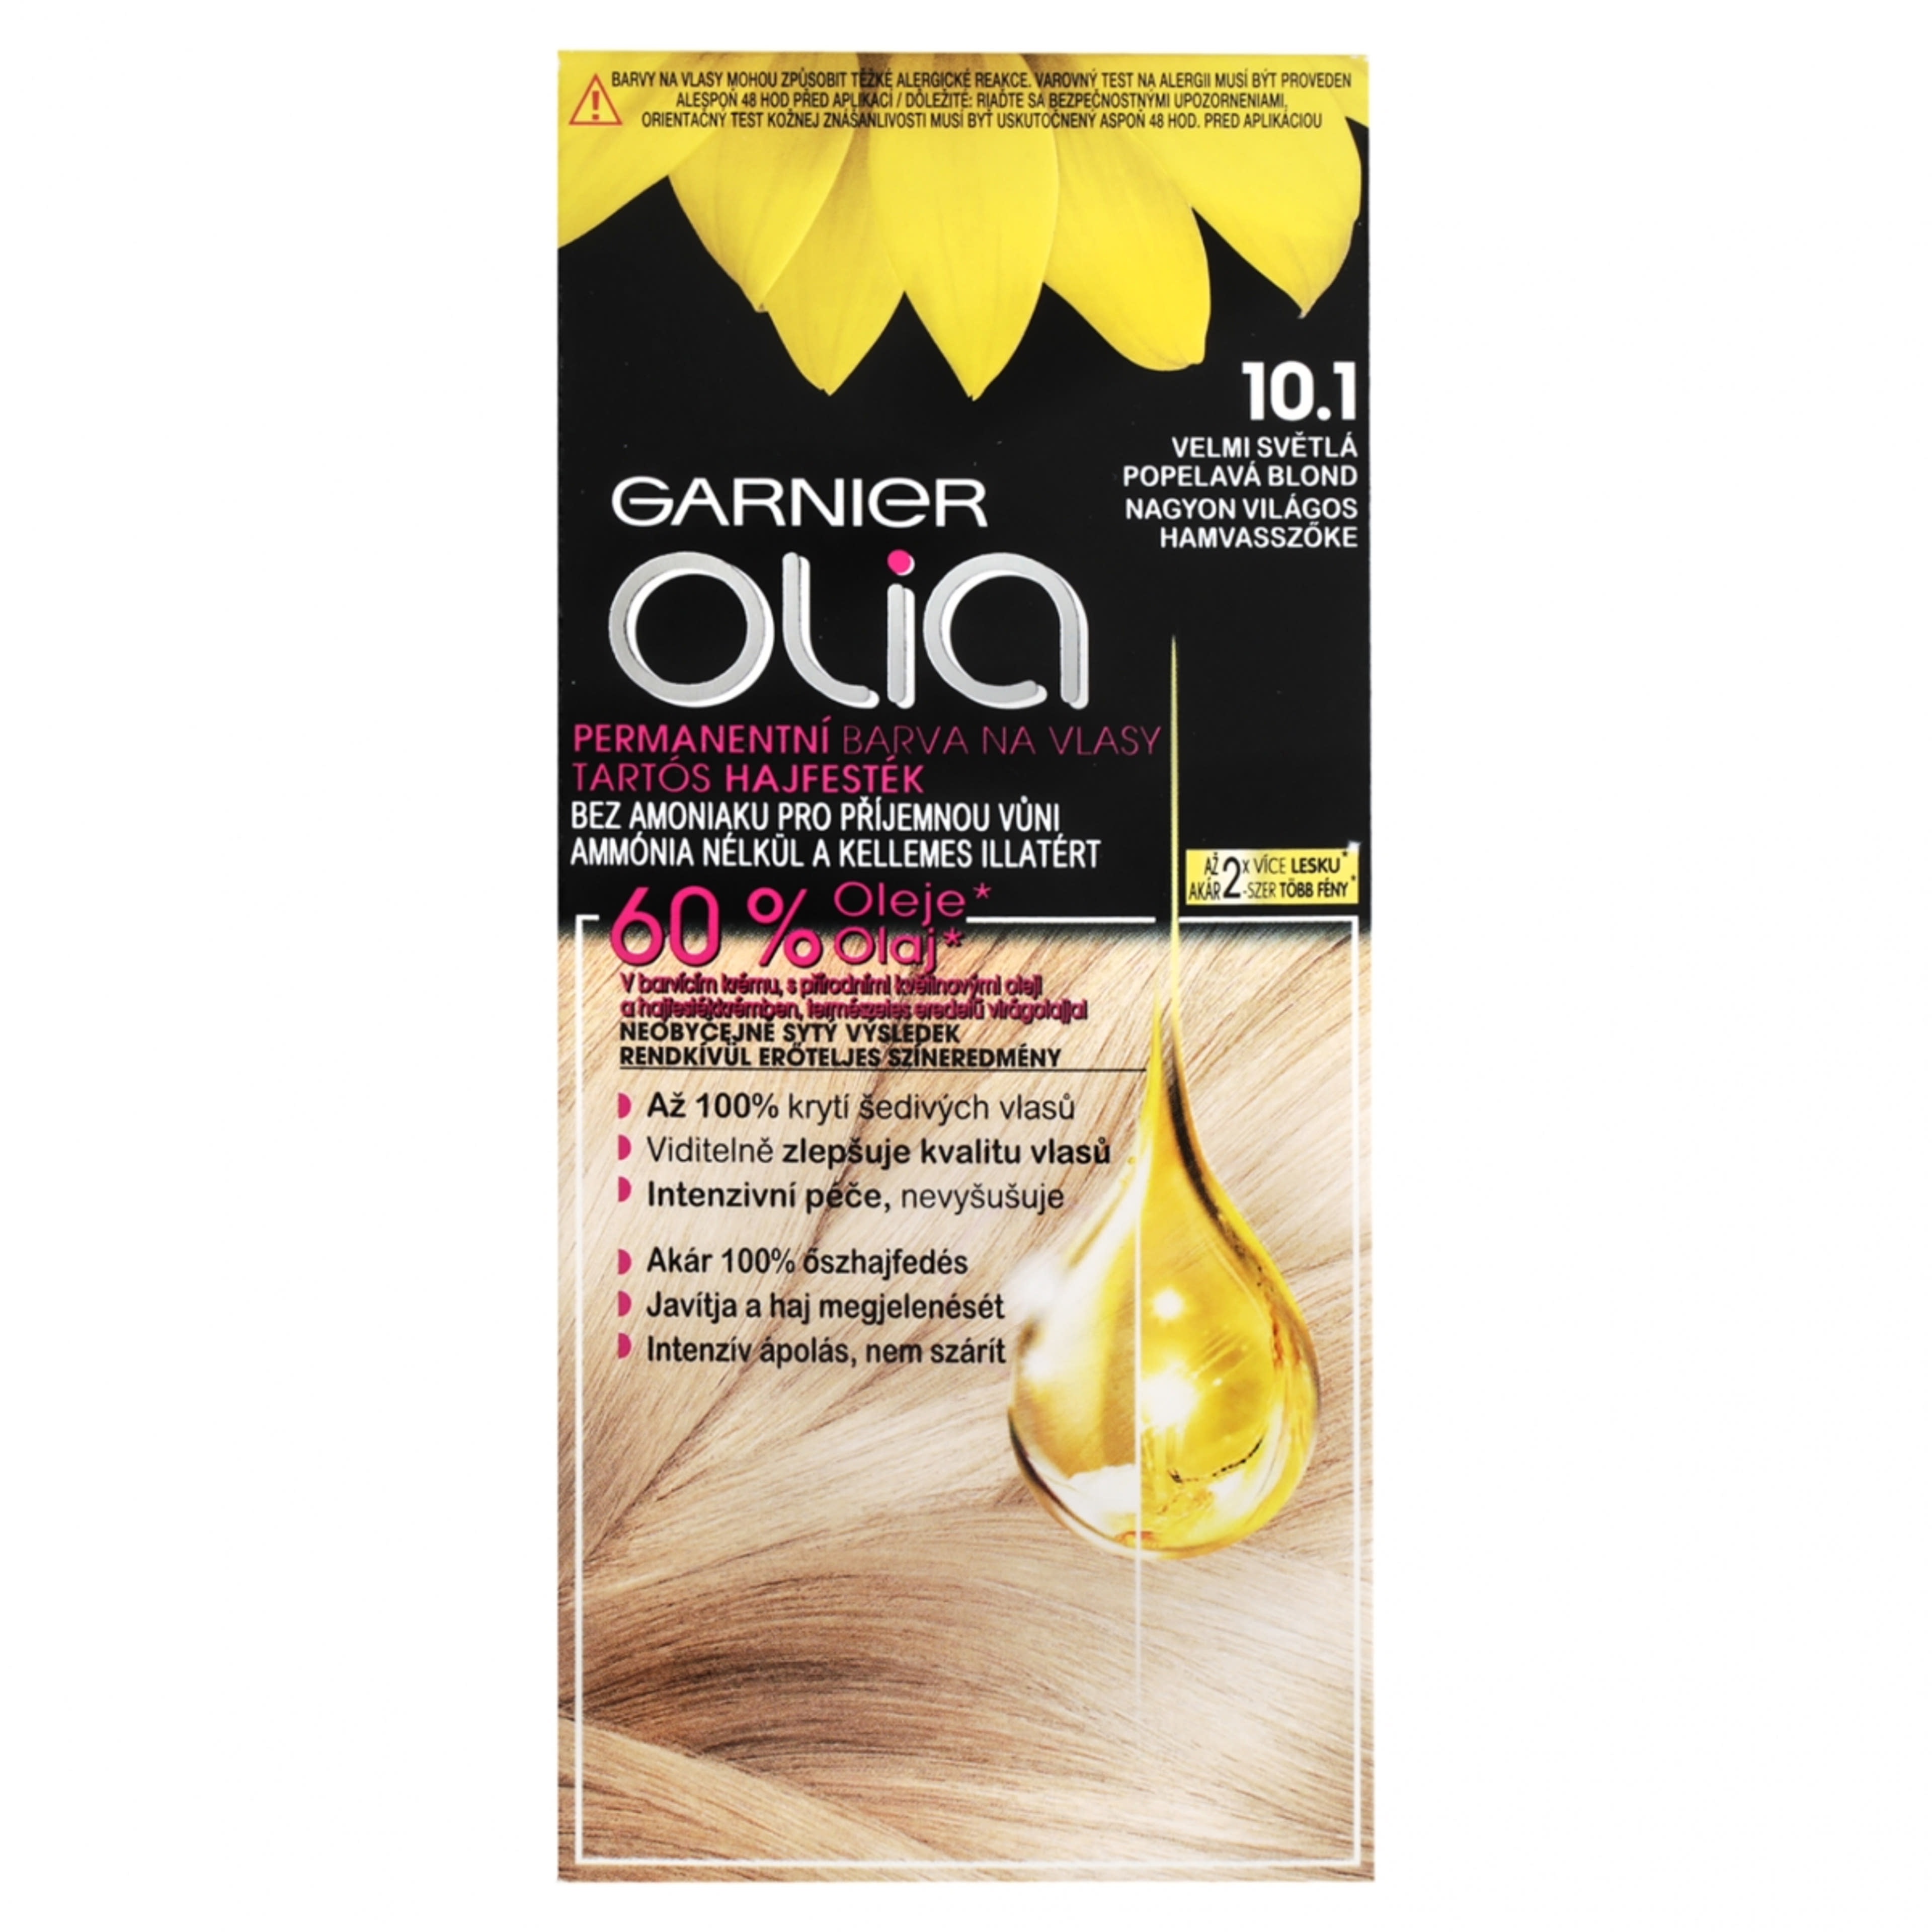 Garnier Olia tartós hajfesték 10.1 Nagyon világos hamvasszőke - 1 db